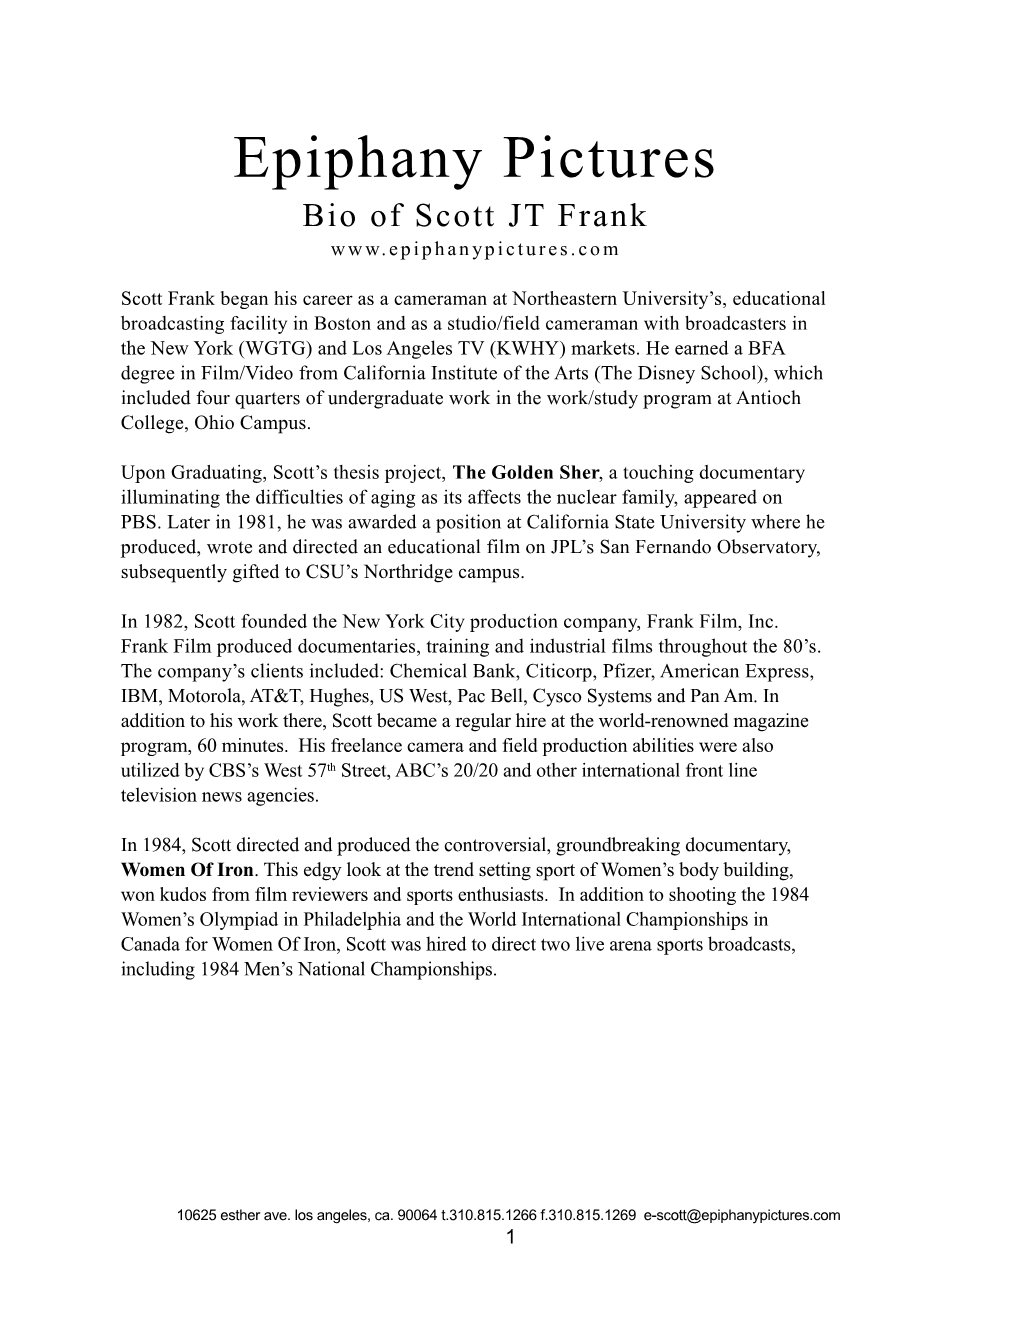 Epiphany Productions, Inc s1